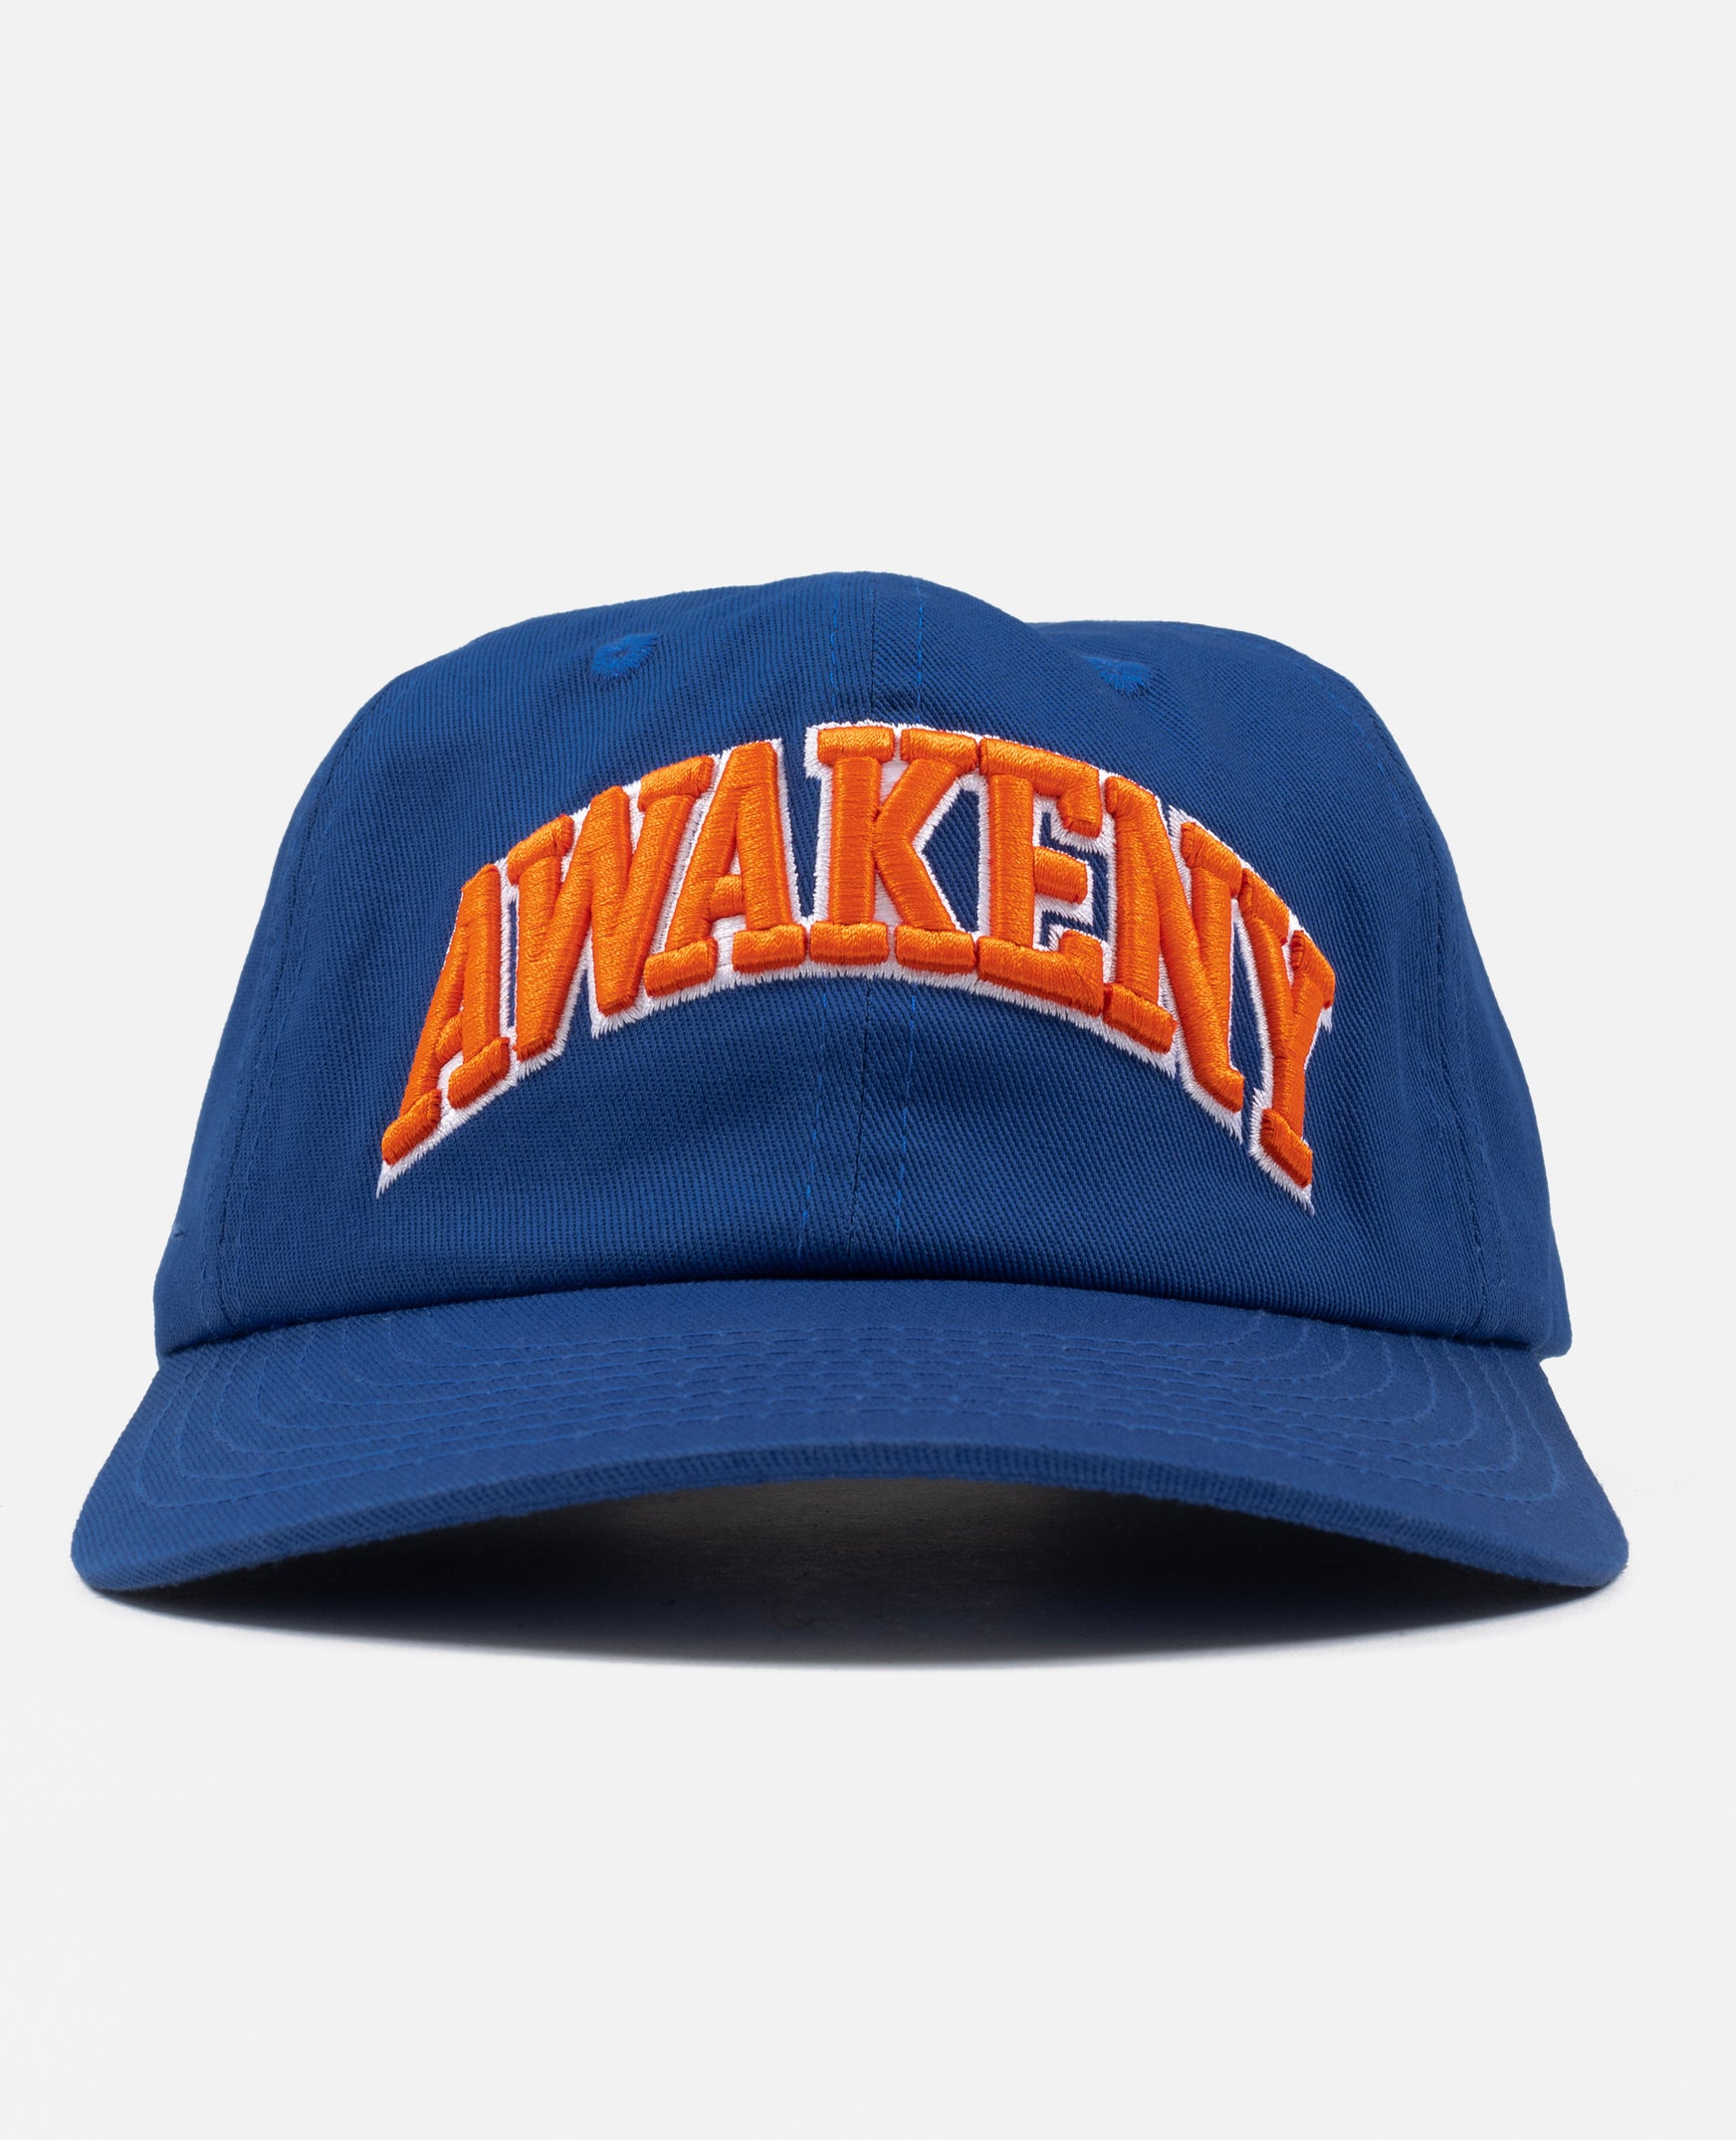 Awake NY 6 Panel Hat (Blue)